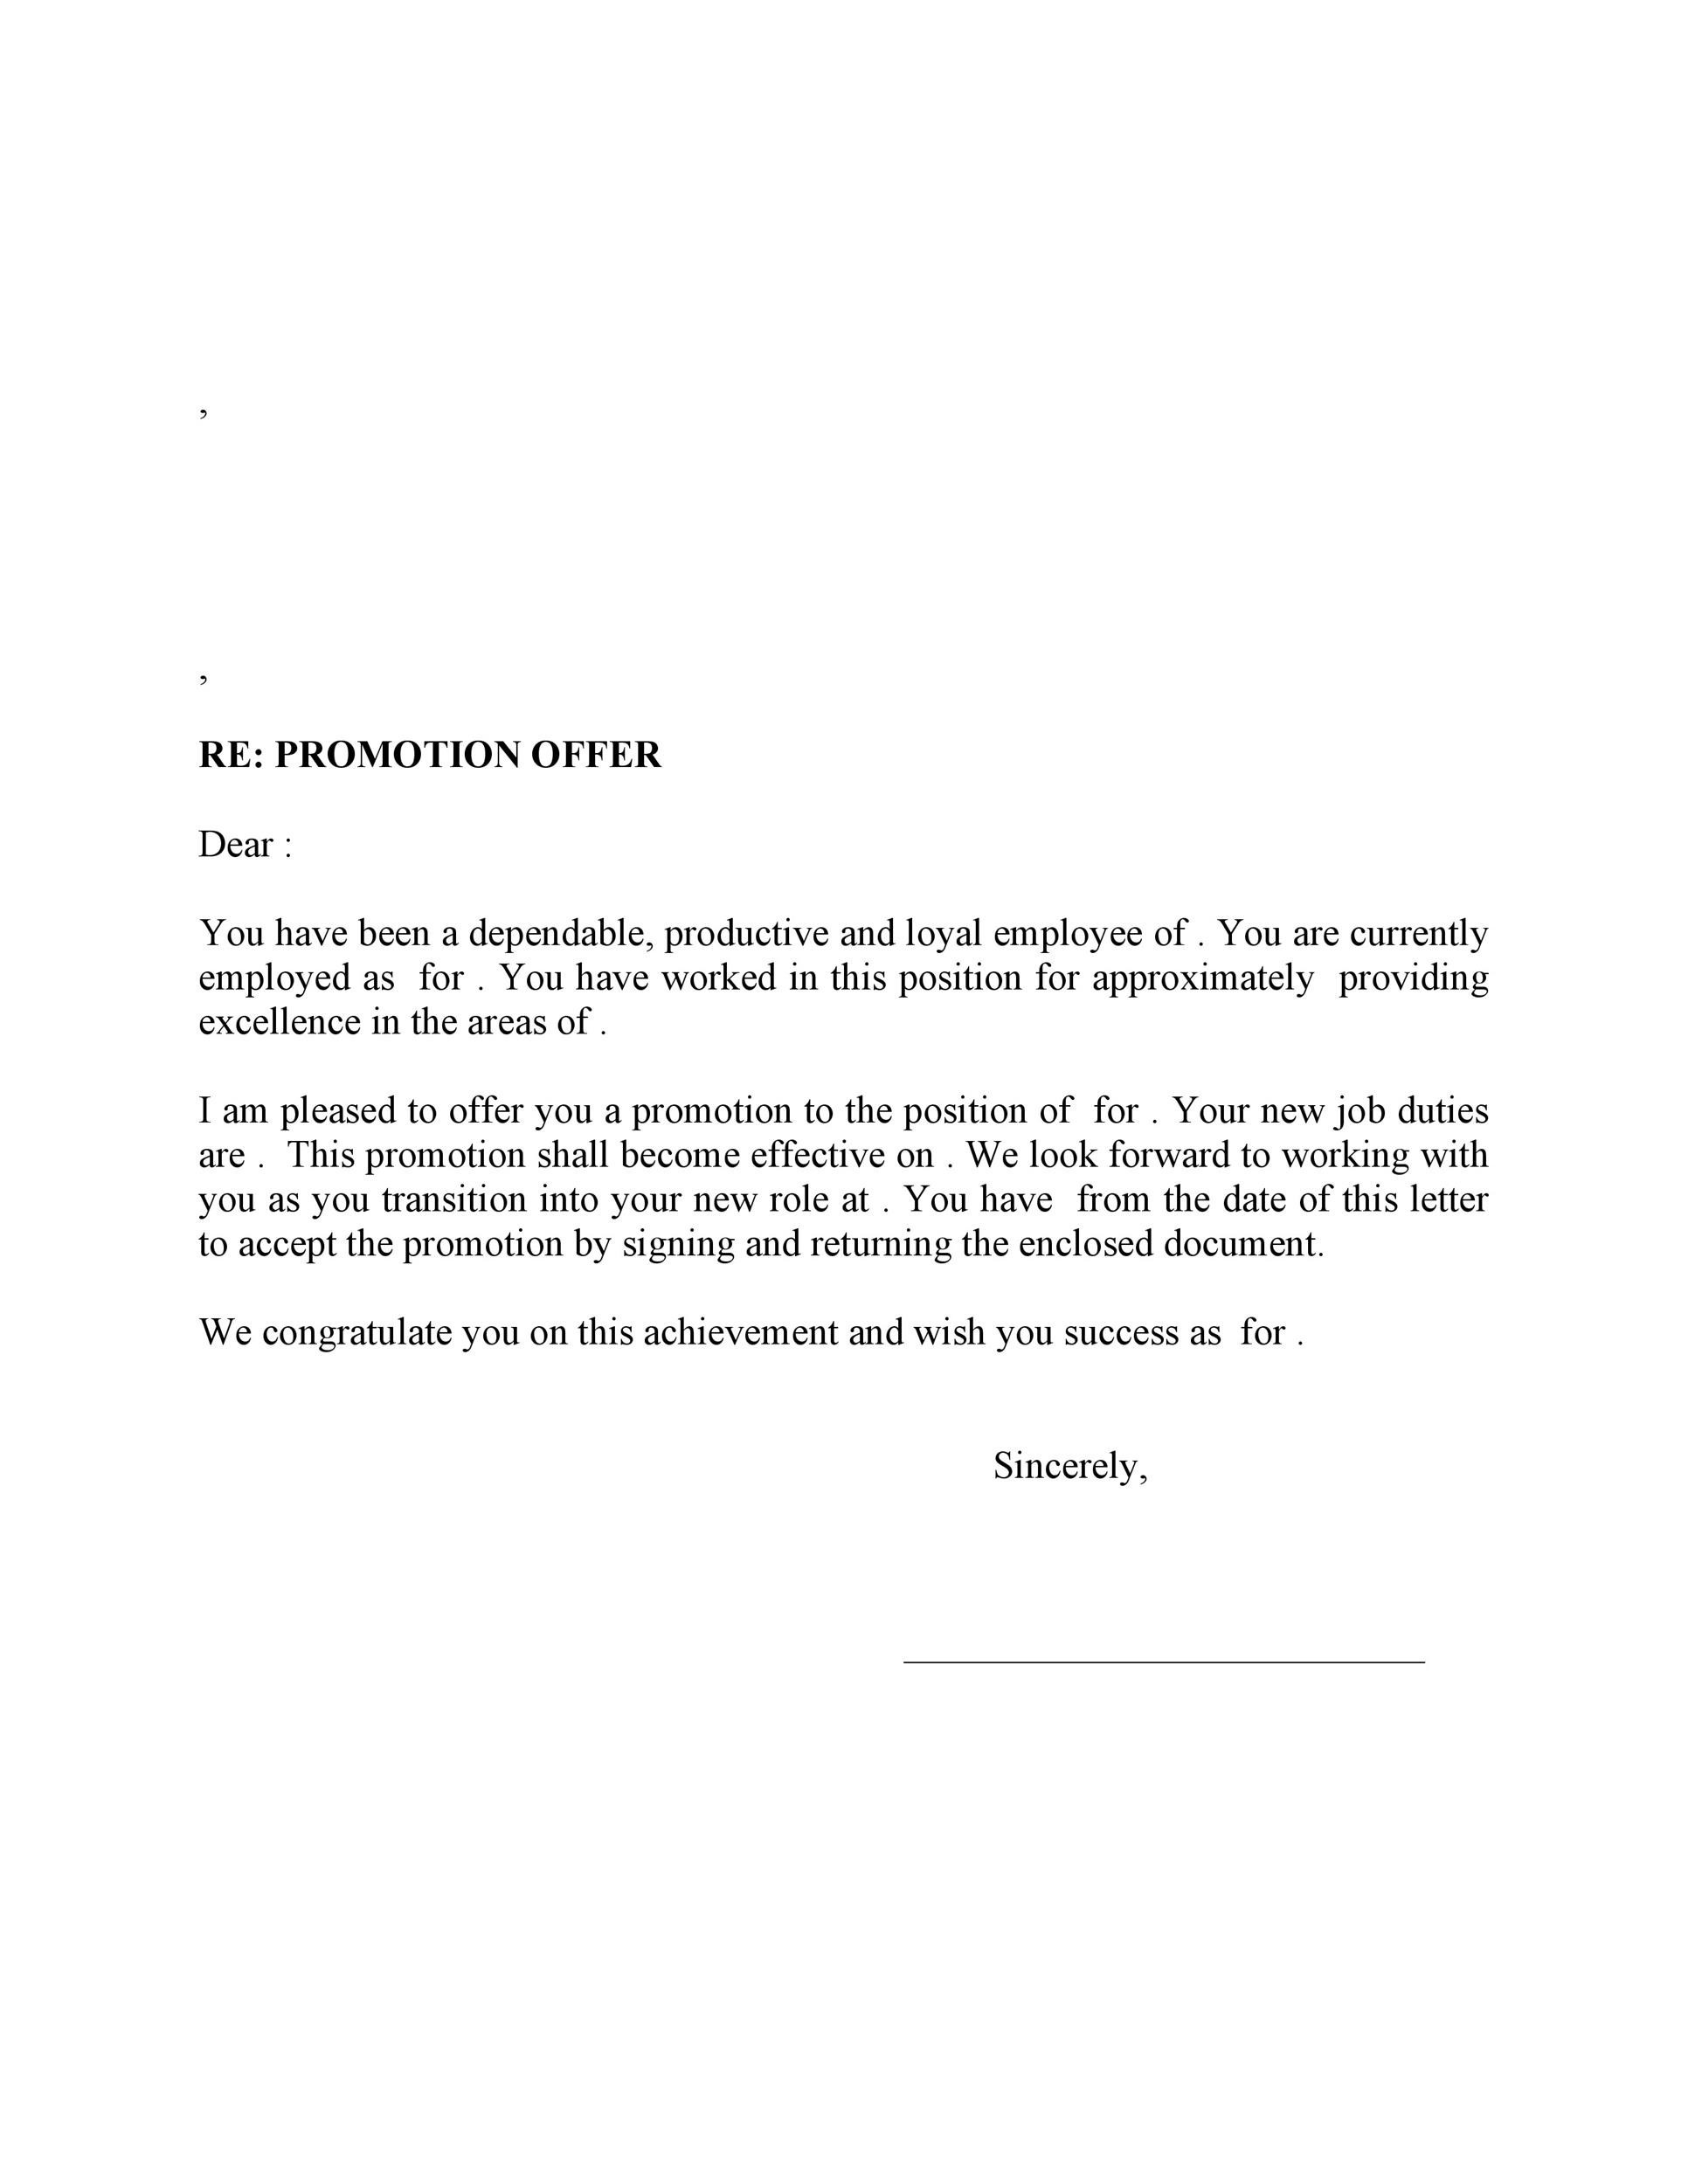 sample cover letter for promotion to supervisor